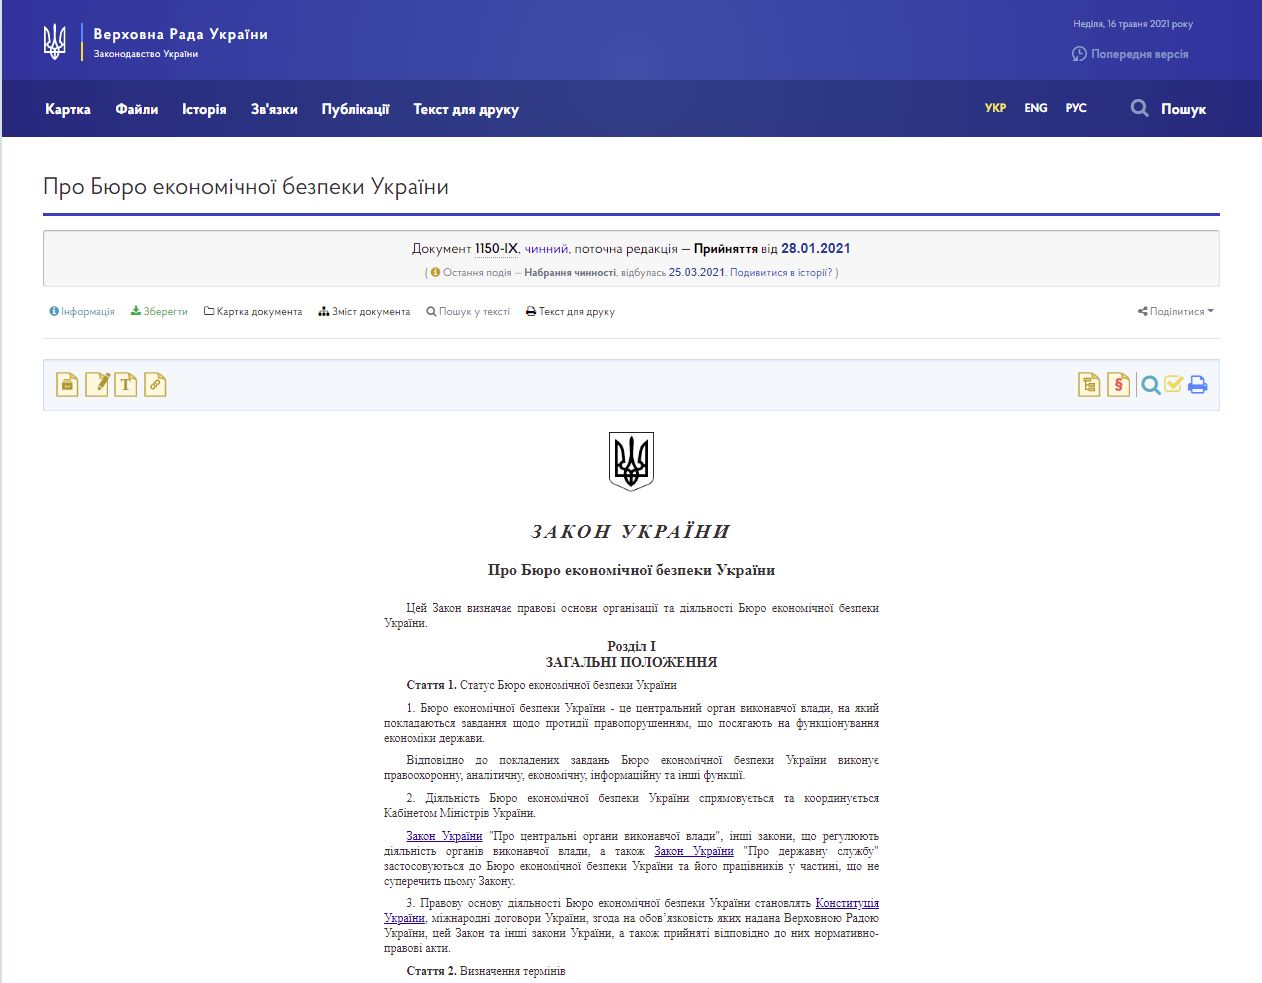 https://zakon.rada.gov.ua/laws/show/1150-20#Text